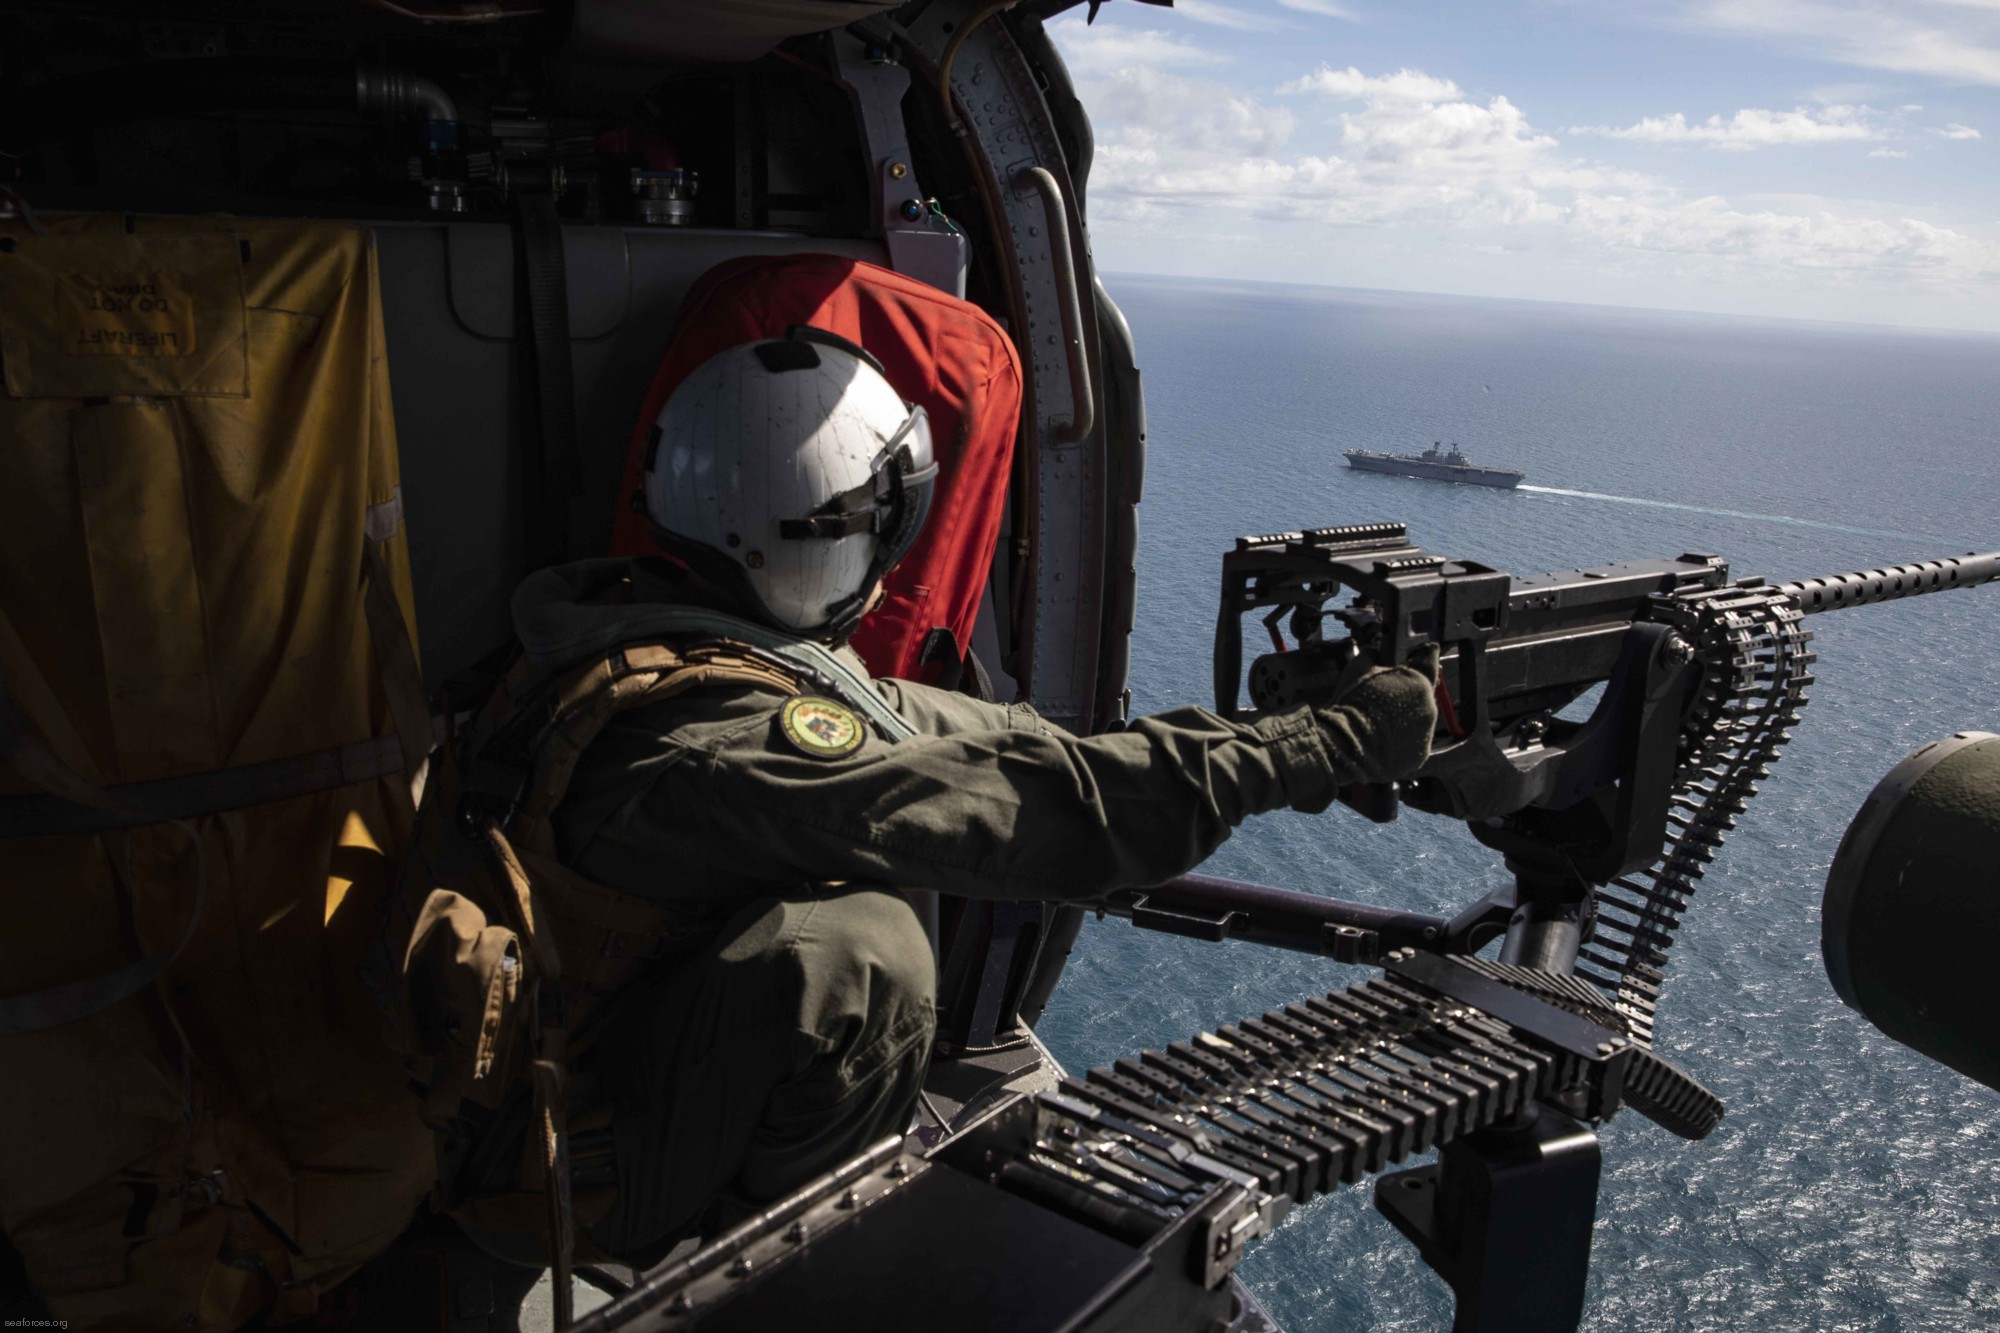 hsc-28 dragon whales helicopter sea combat squadron mh-60s seahawk us navy 02 caliber .50 machine door gun